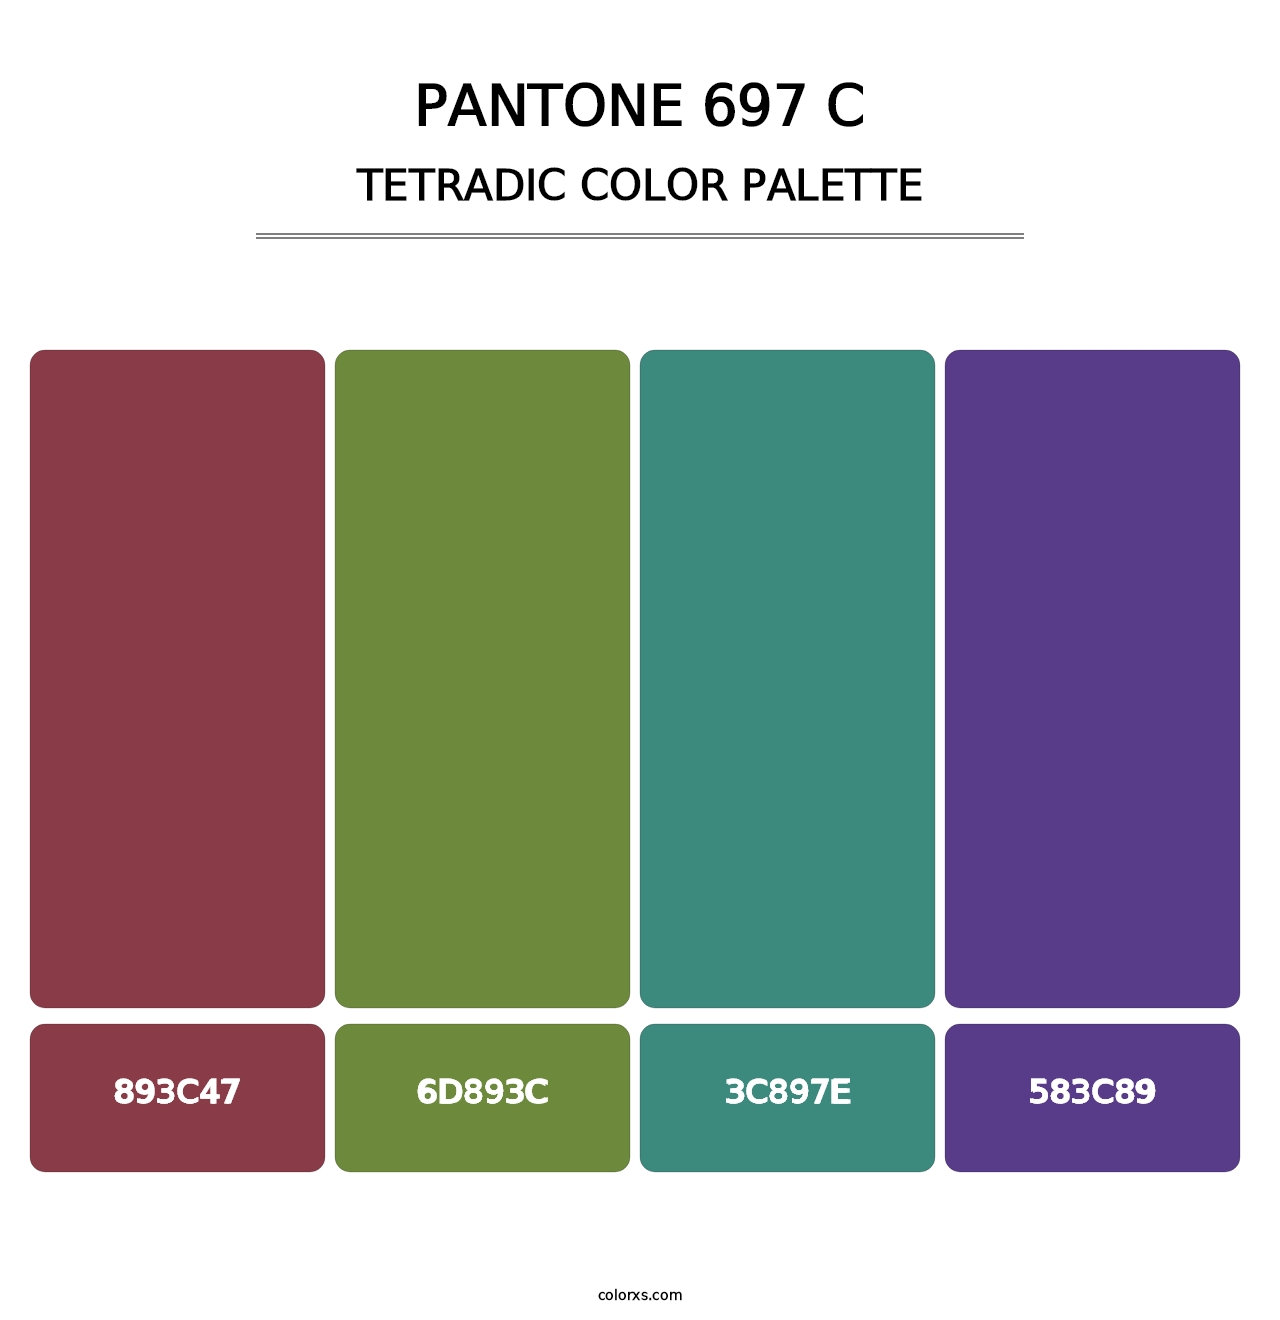 PANTONE 697 C - Tetradic Color Palette